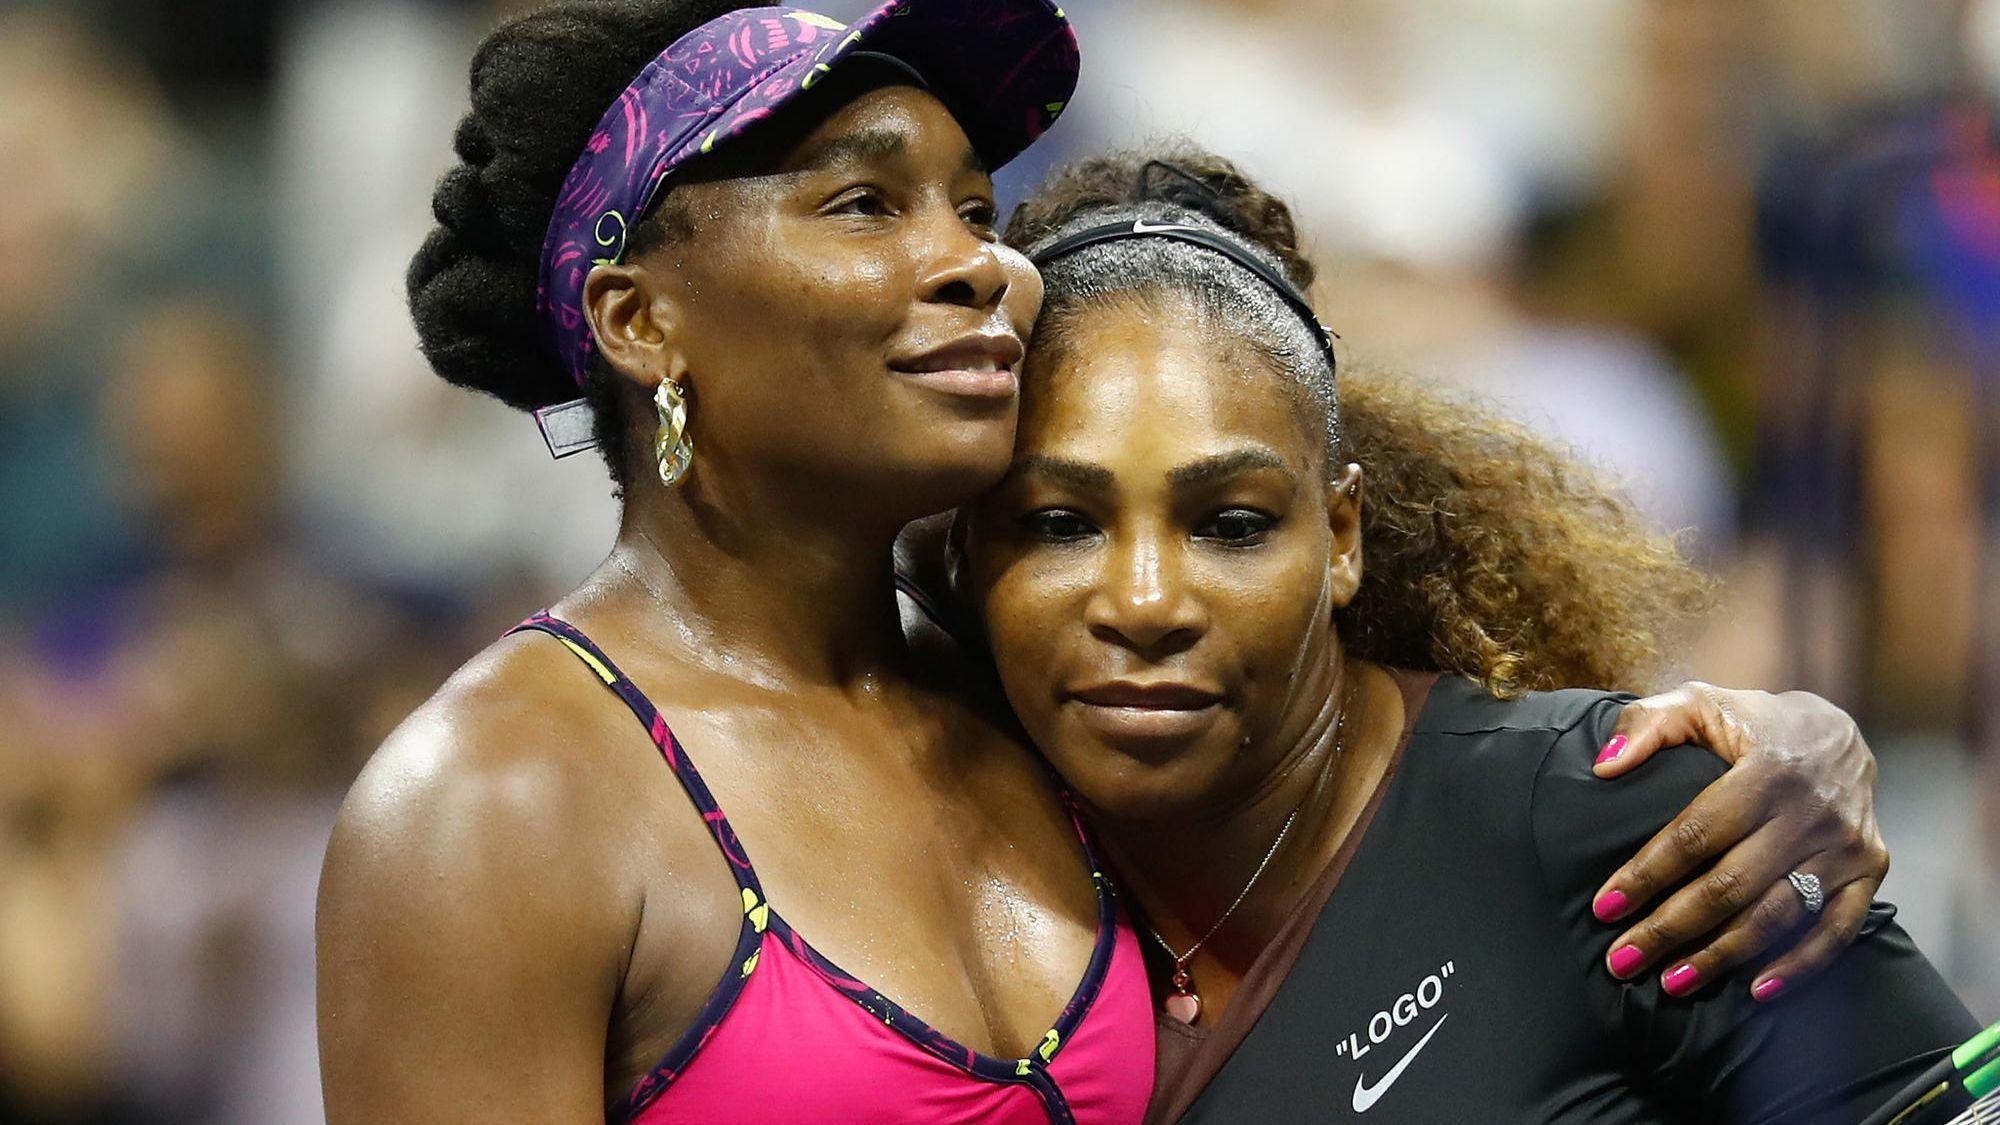 Venus and Serena Williams help inspire diversity in tennis - Chicago Tribune2000 x 1125